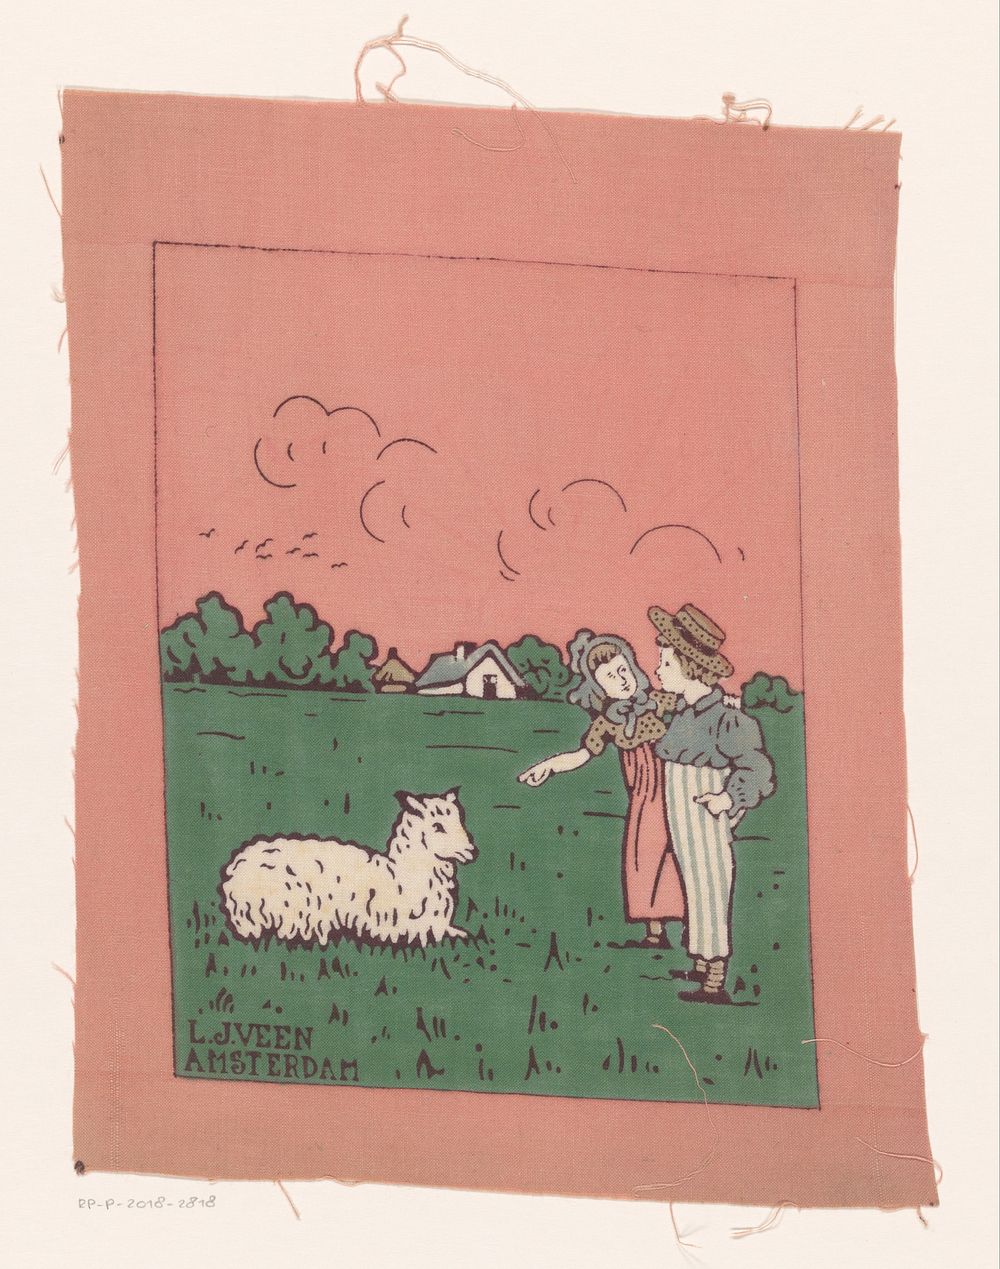 Jongen, meisje en schaap in een weiland (c. 1890 - c. 1920) by anonymous